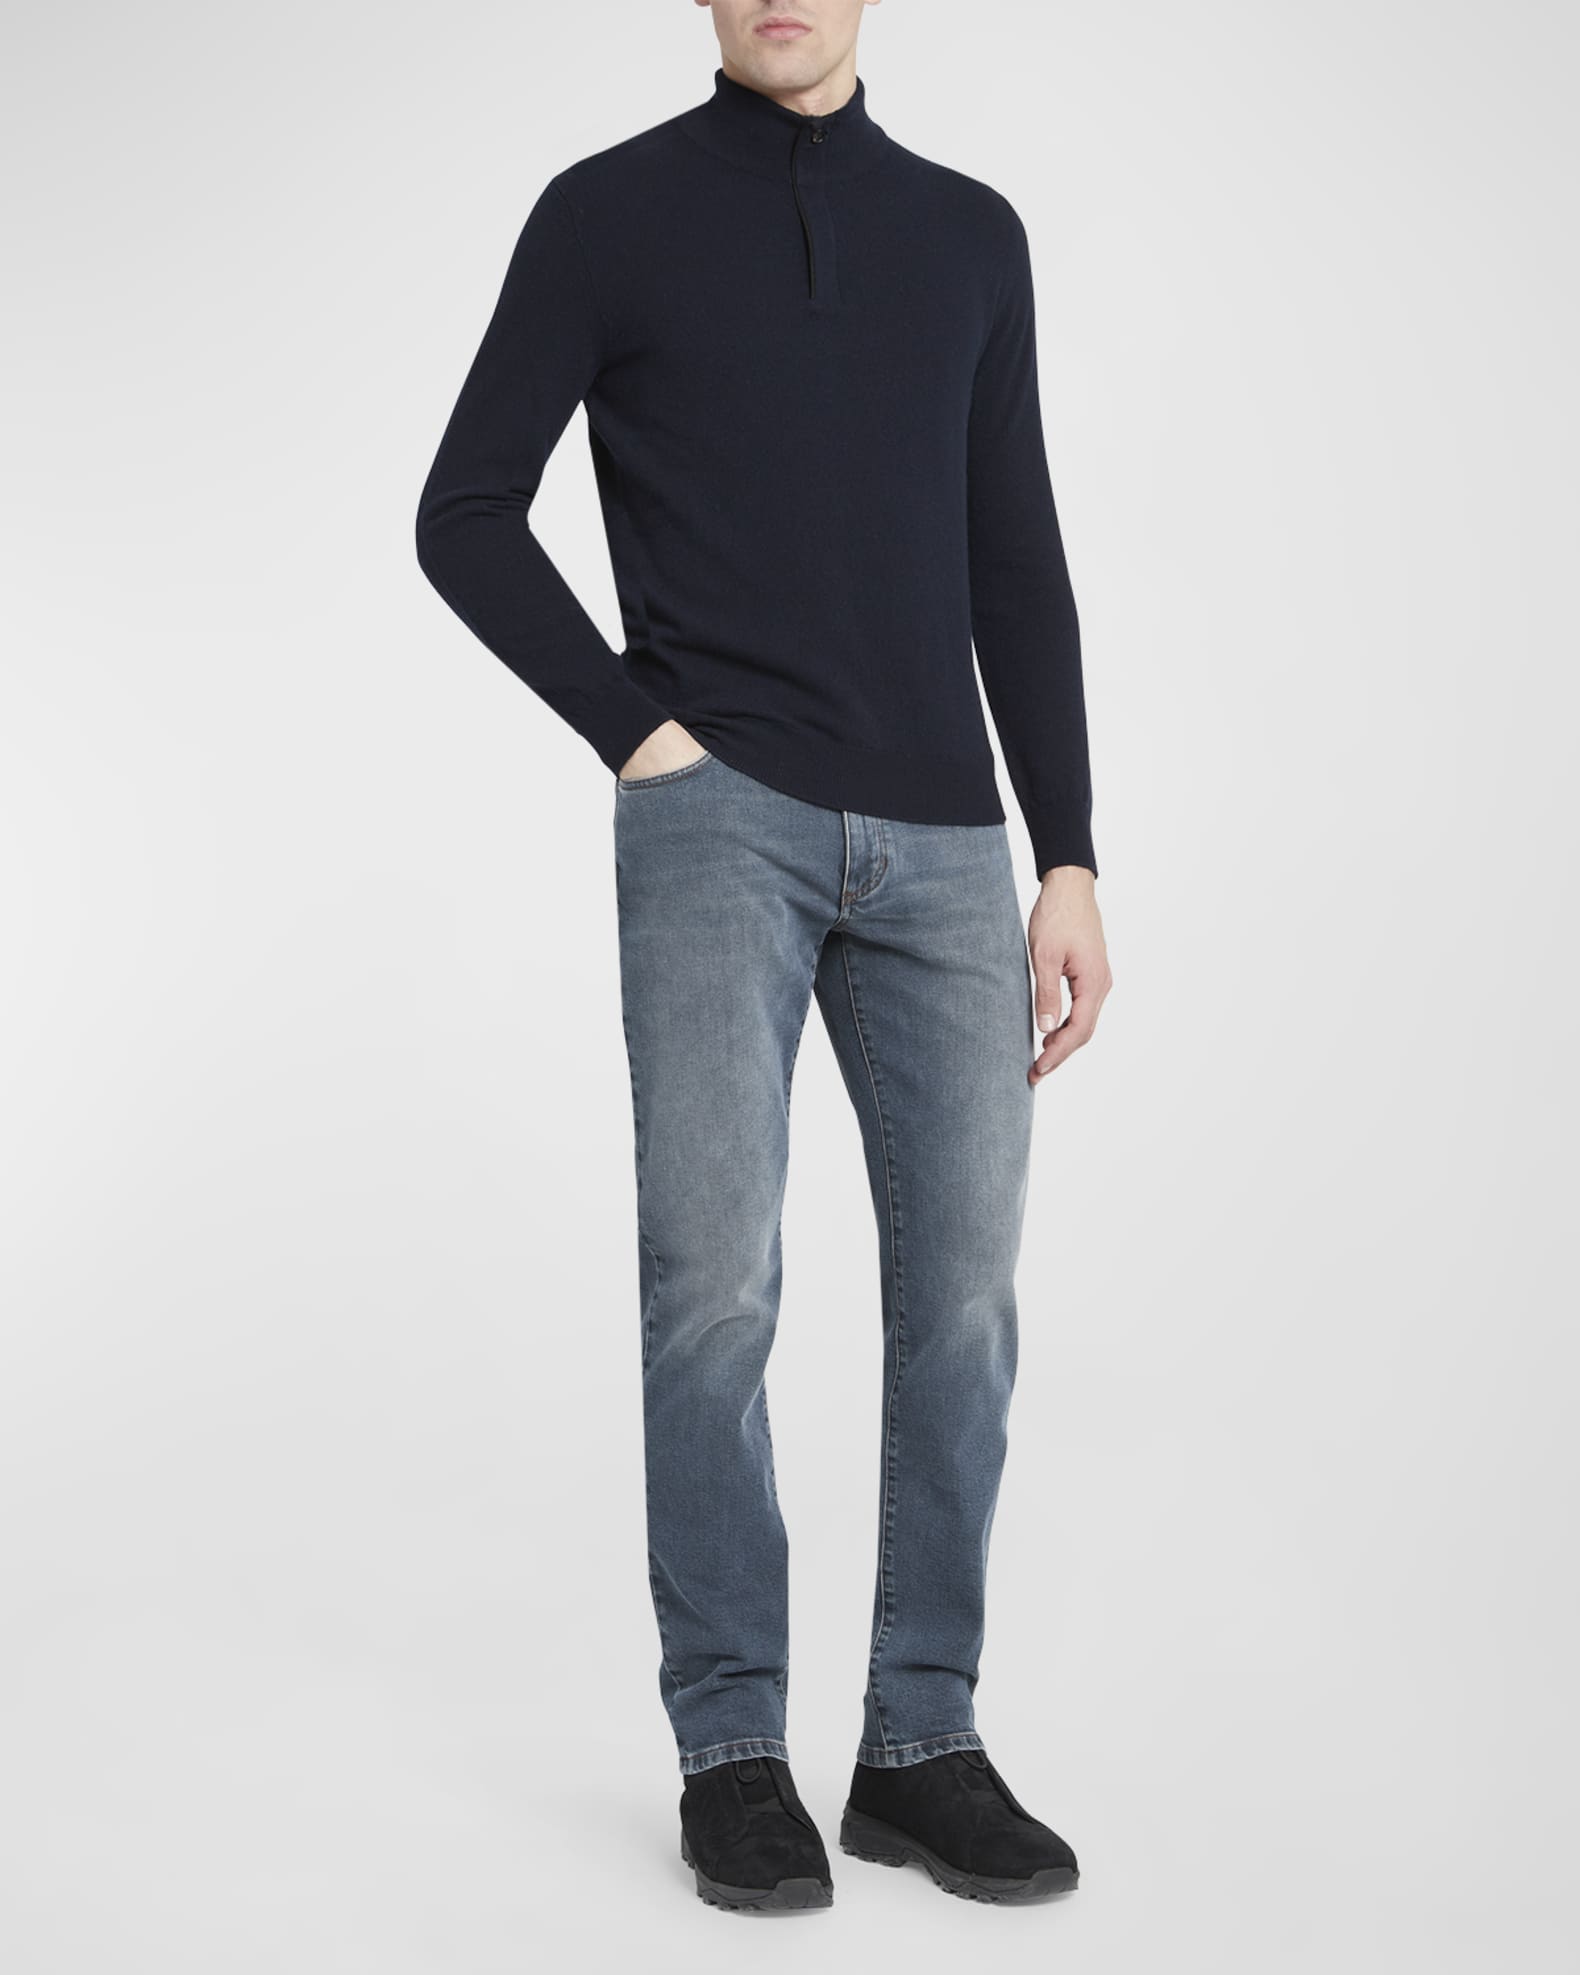 ZEGNA Men's Oasi Cashmere Zip Mock Neck Sweater | Neiman Marcus